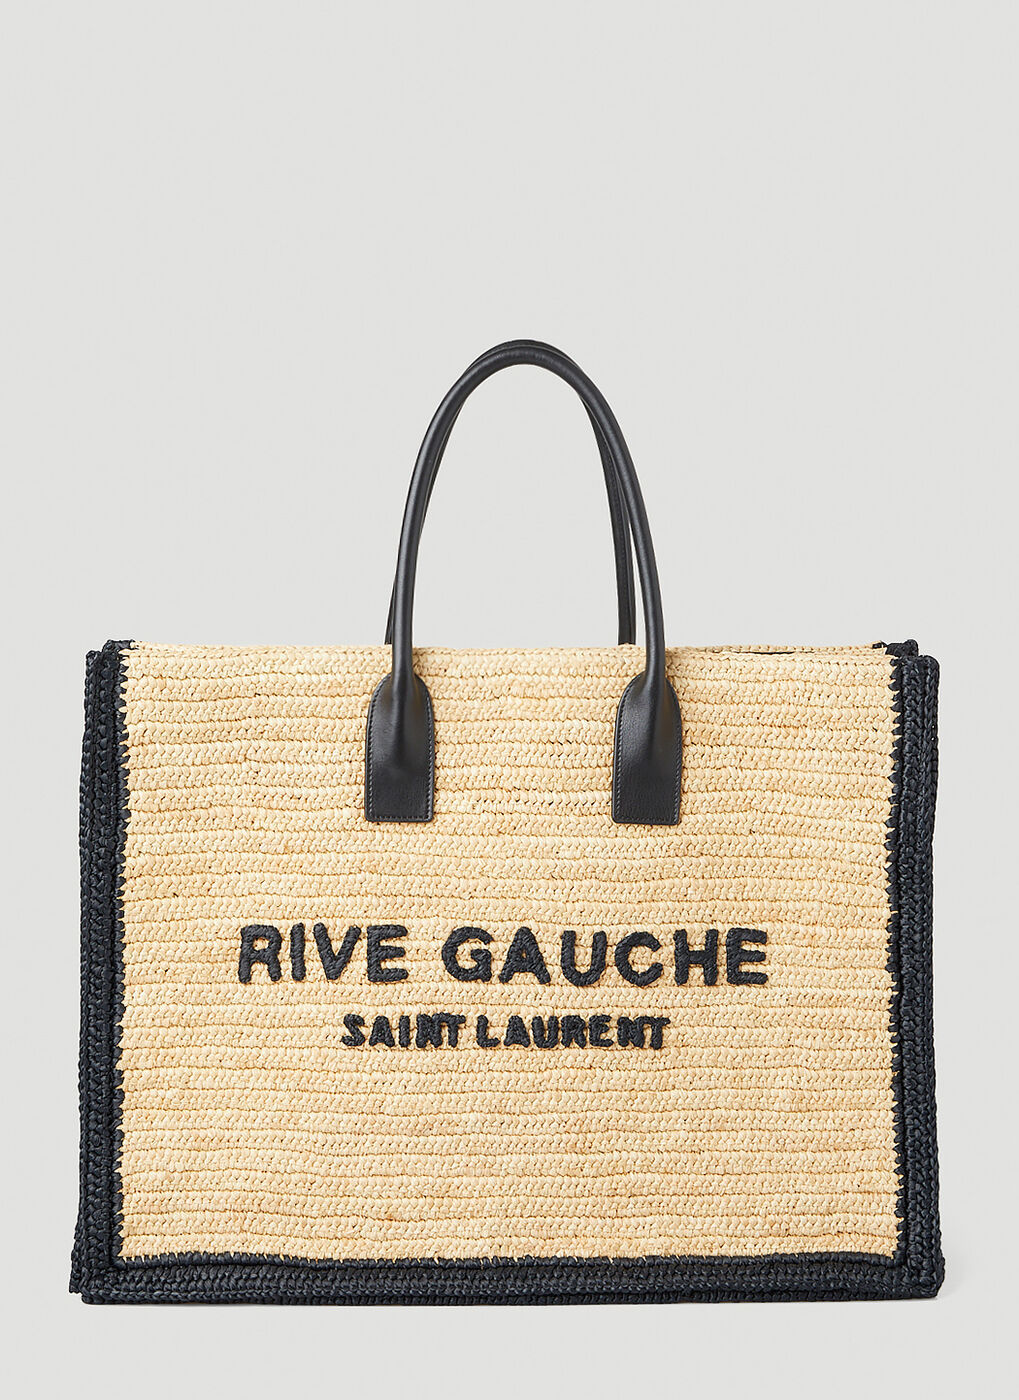 Rive Gauche Raffia Tote Bag in Beige Saint Laurent